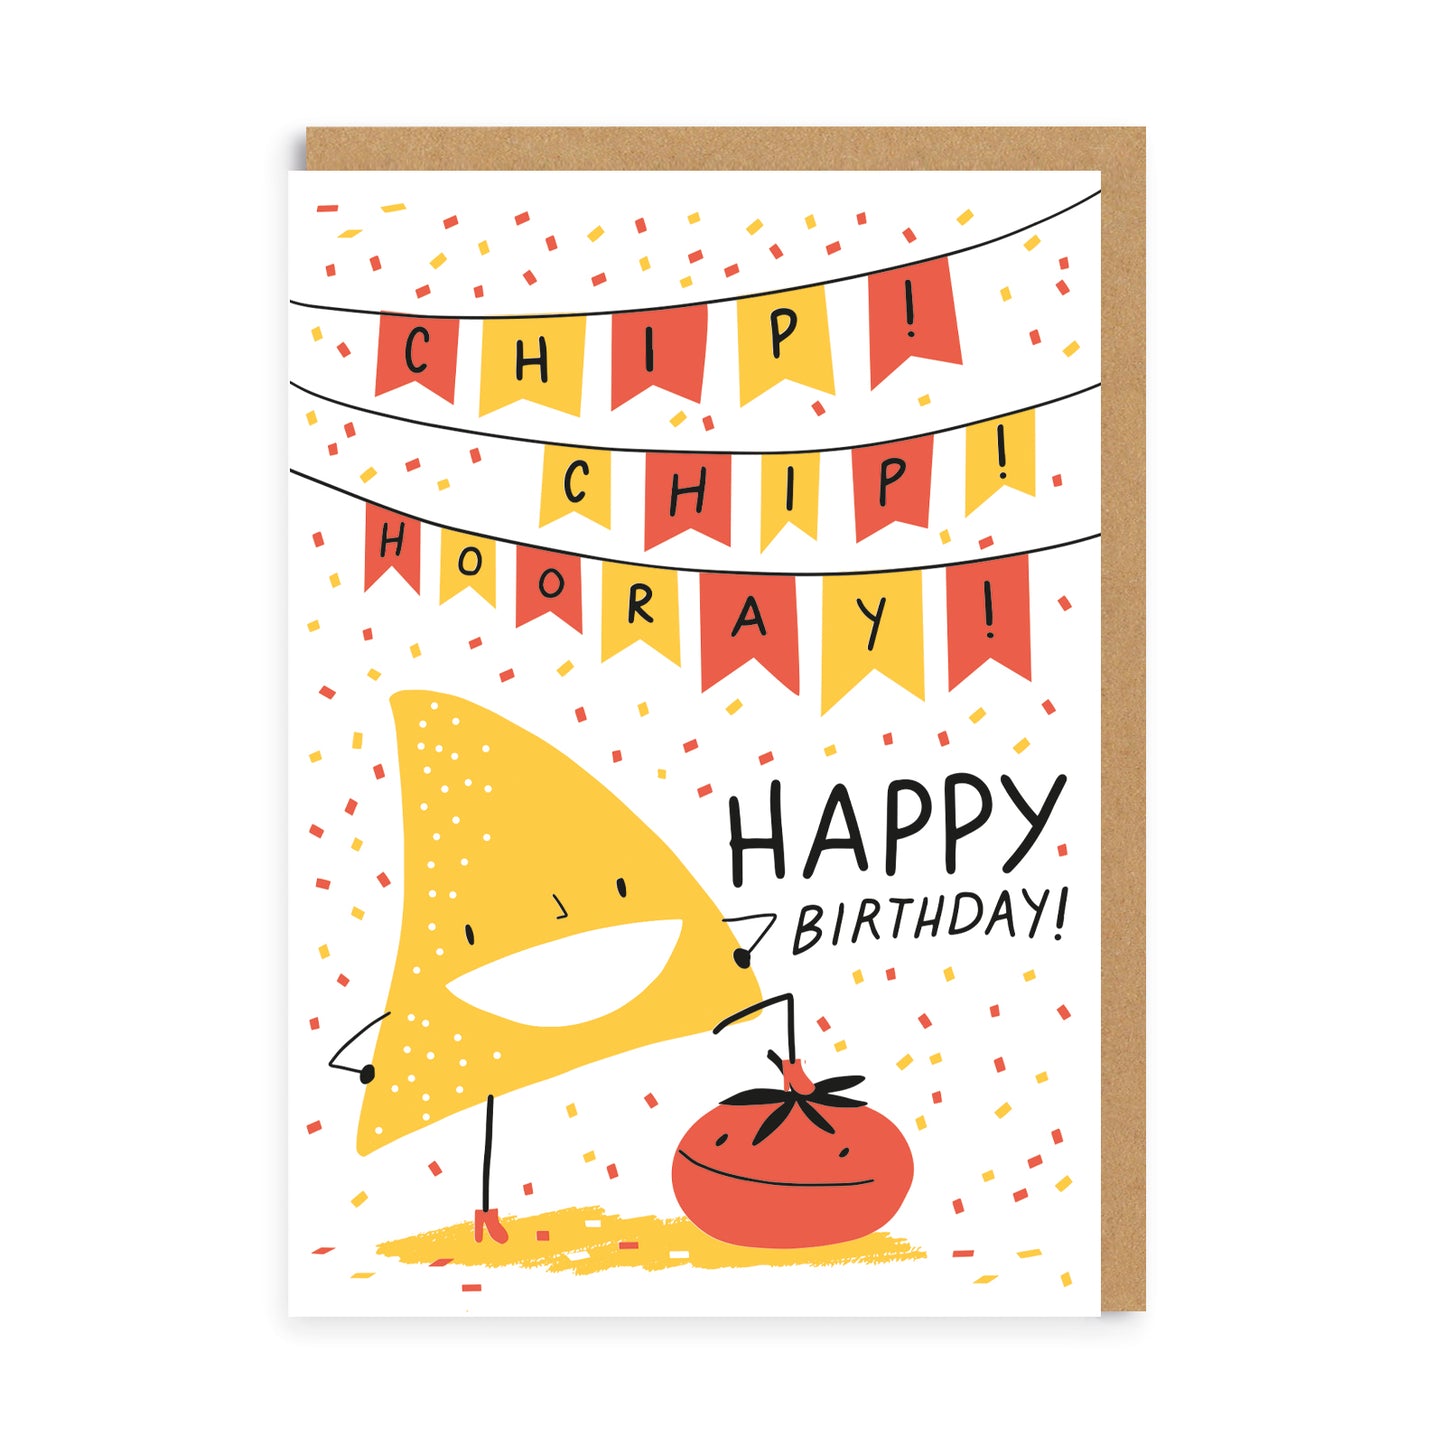 Chip Chip Hooray Birthday Greeting Card